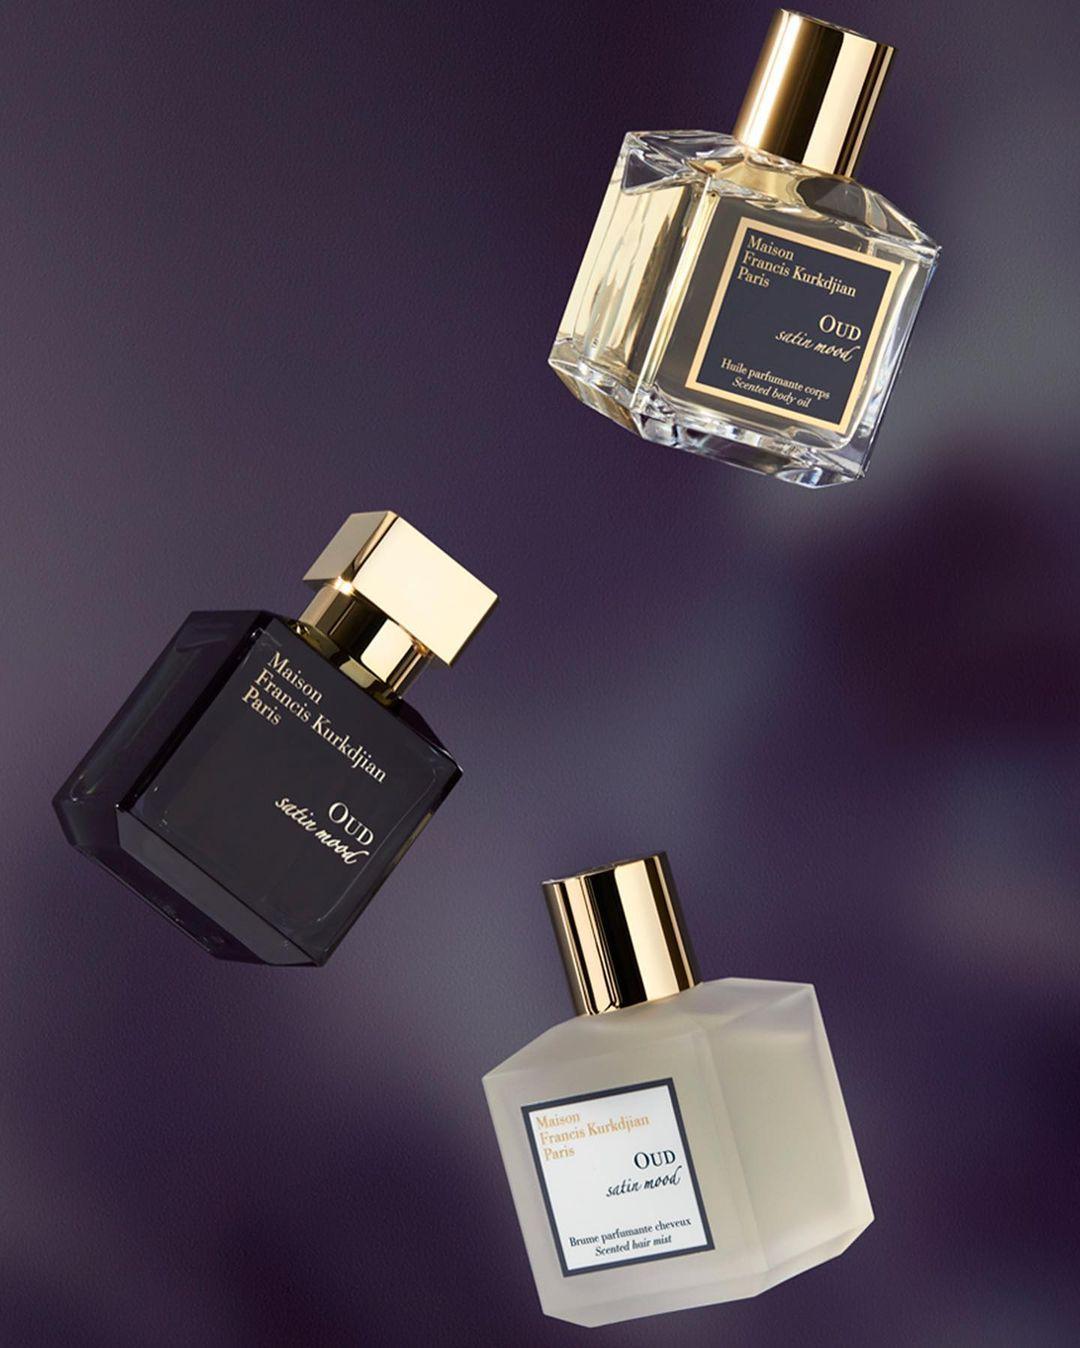 Maison Francis Kurkdjian - Oud satin mood eau de parfum - body oil - hair mist | Perfume Lounge